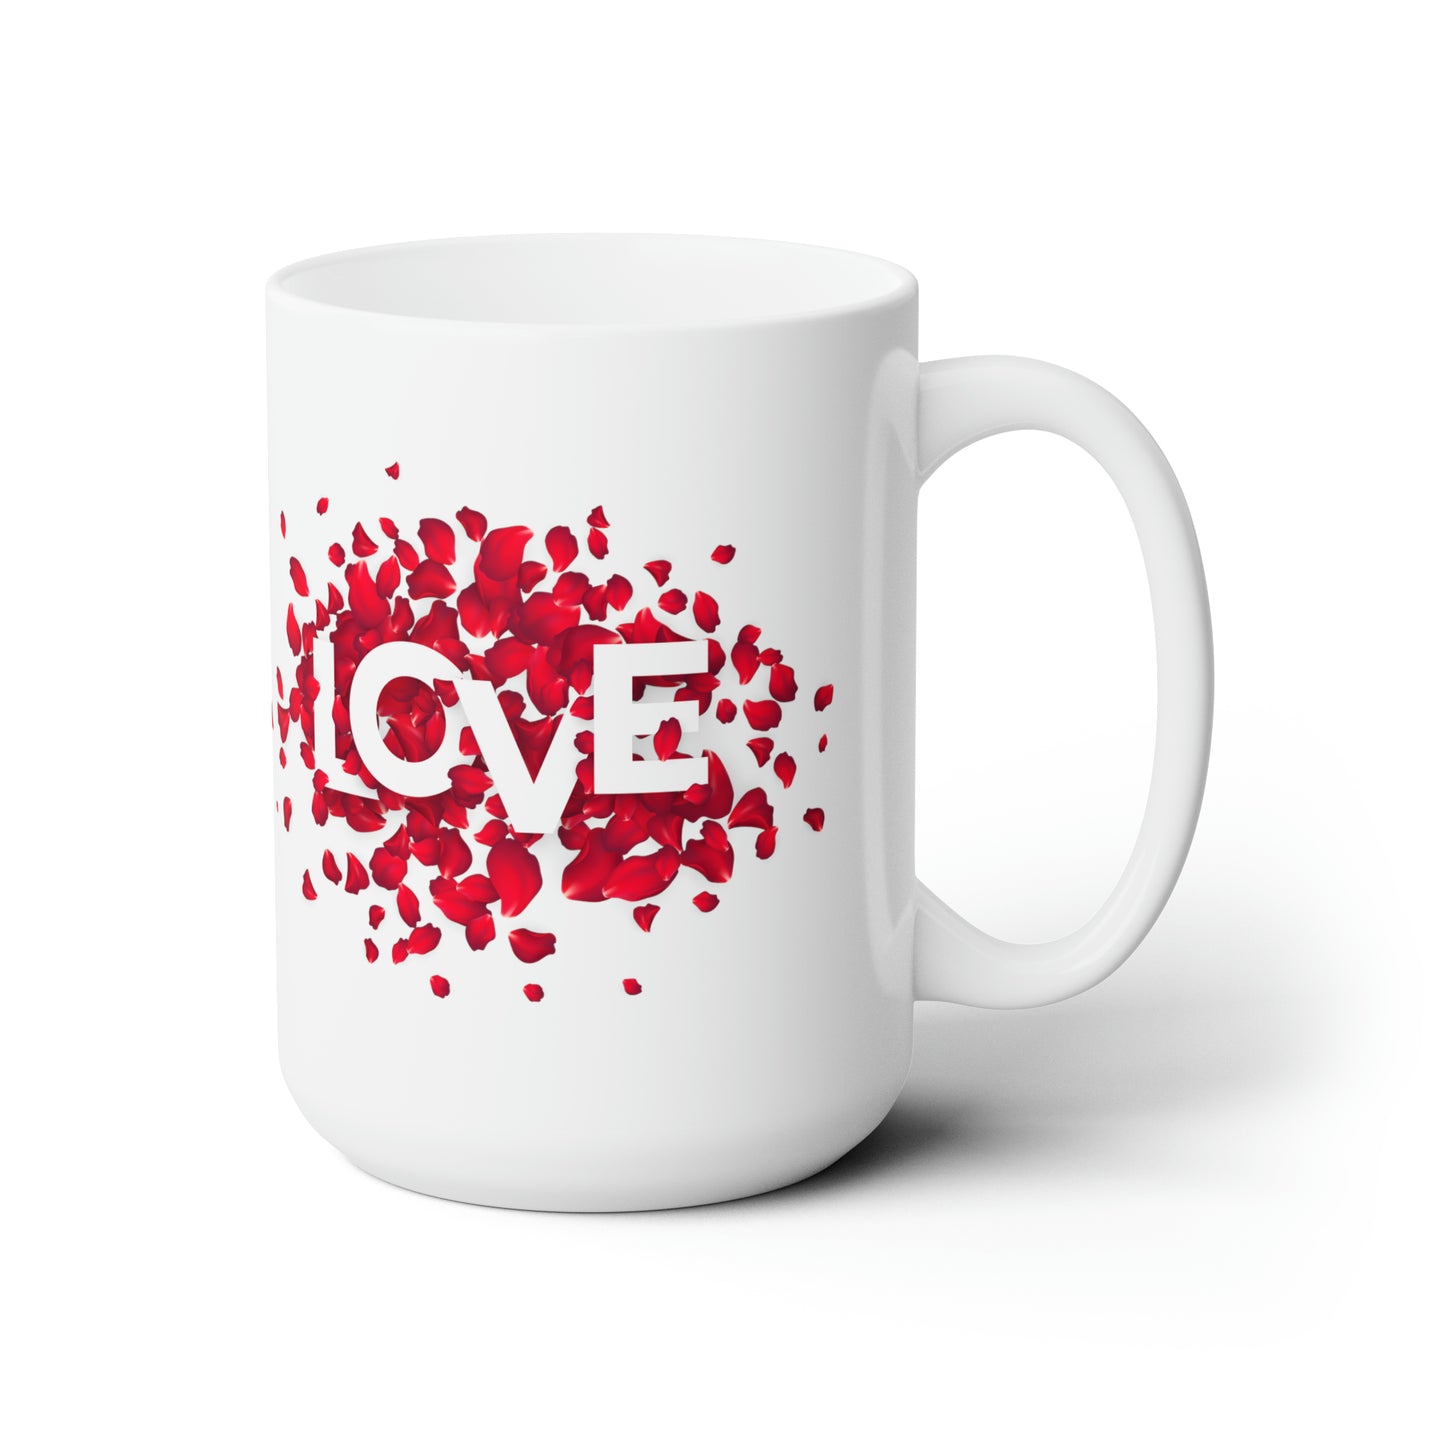 Love with Heart made of Flower Printed Ceramic Valentine Mug, 15oz